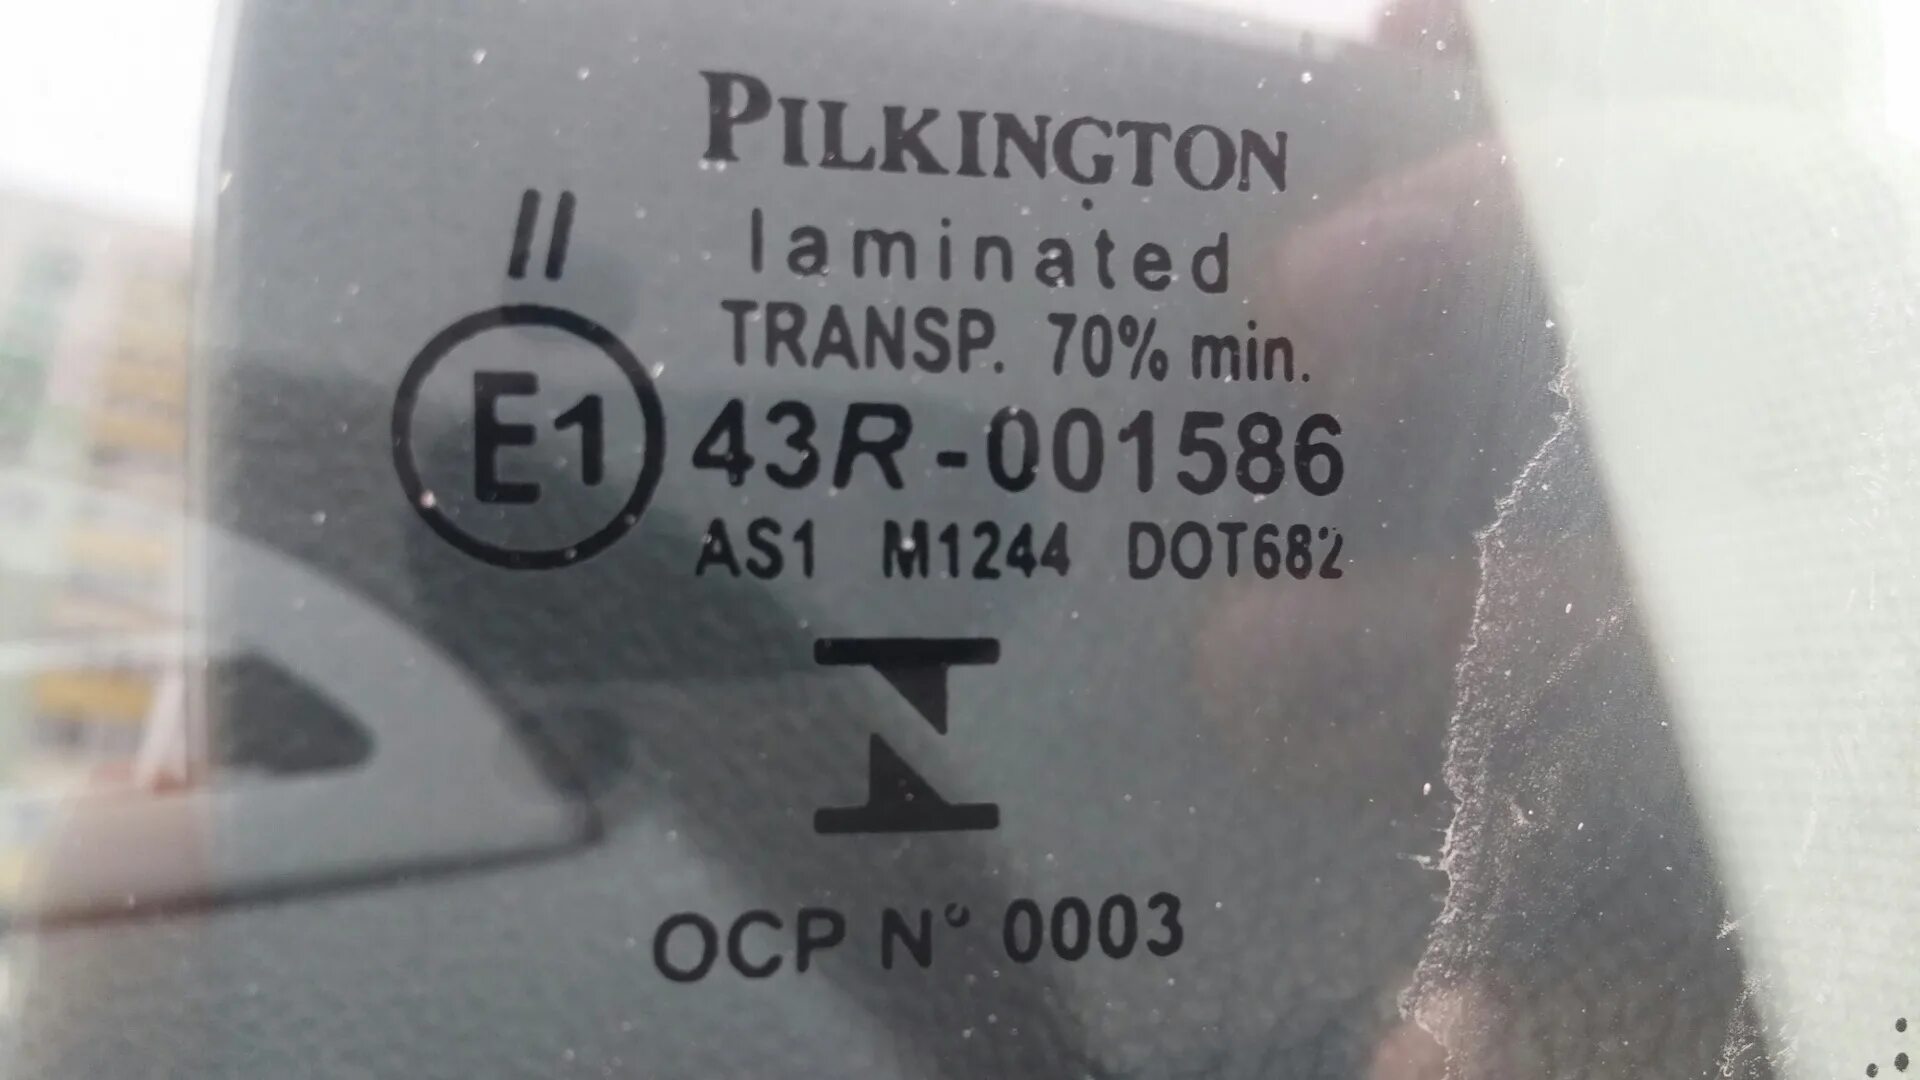 1 43 r. Стекло Pilkington 43r-001586. Стекло Pilkington 43r-001586 Audi as1 m1244-1 dot682. Pilkington 43r-001586 as2 m3240 dot682 e000201. 43r-001692 Pilkington.